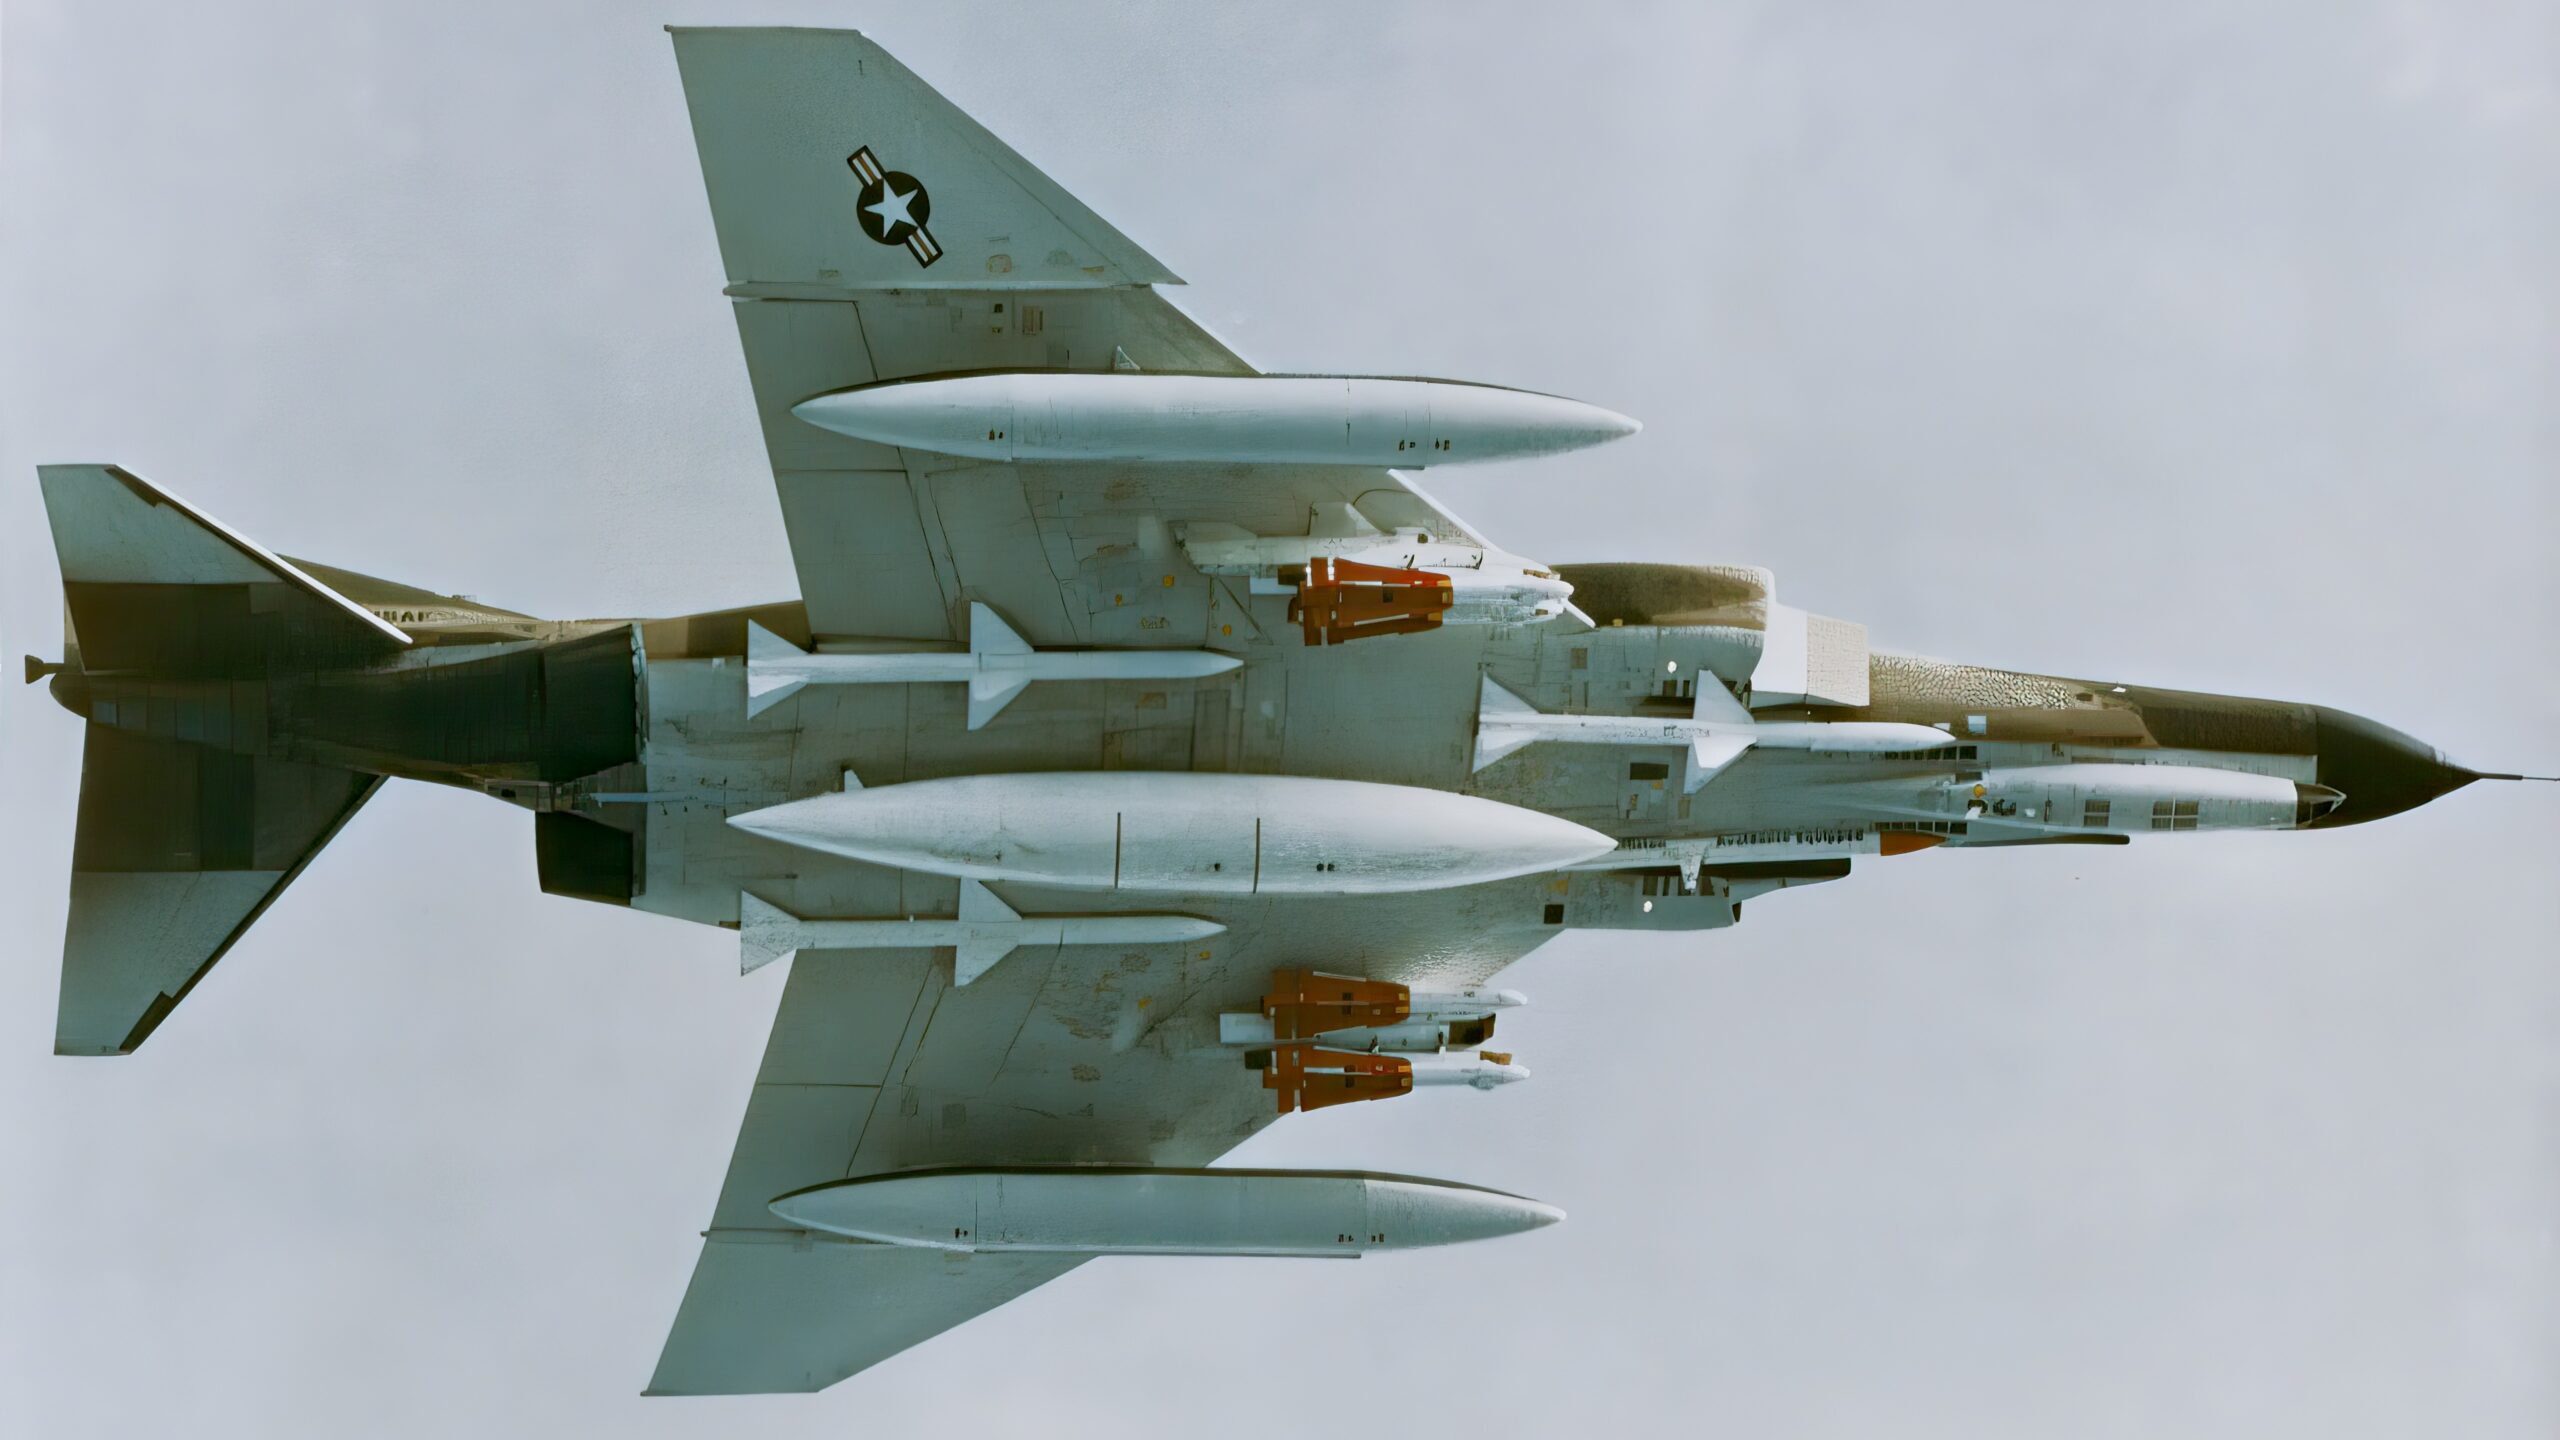 F-4E Phantom II aircraft armed with three AIM-7 Sparrow missiles